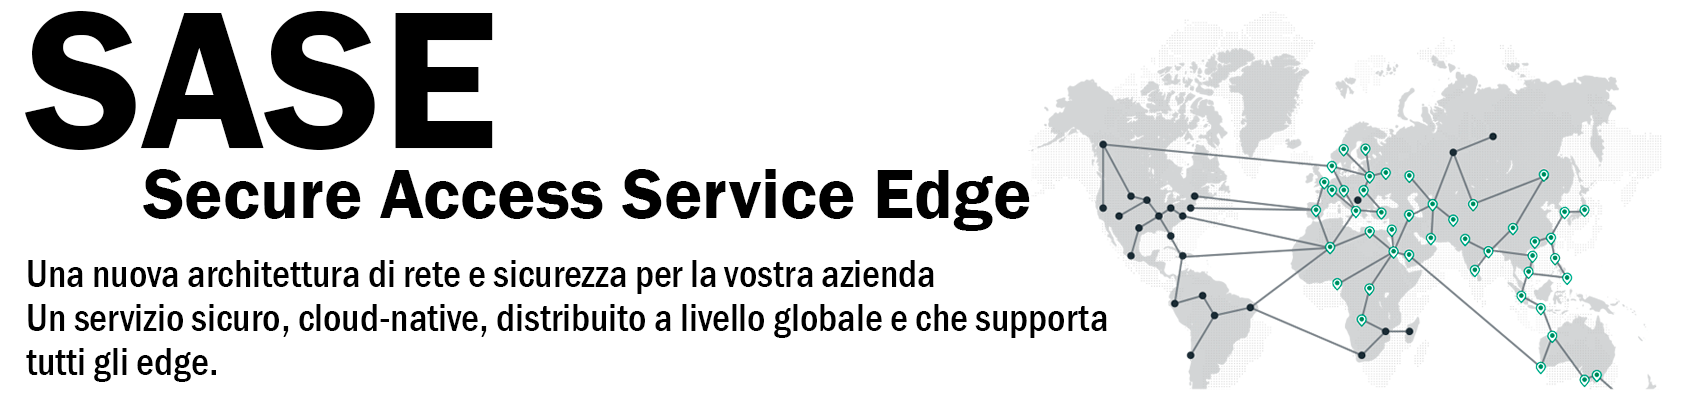 SASE Secure Access Service Edge 